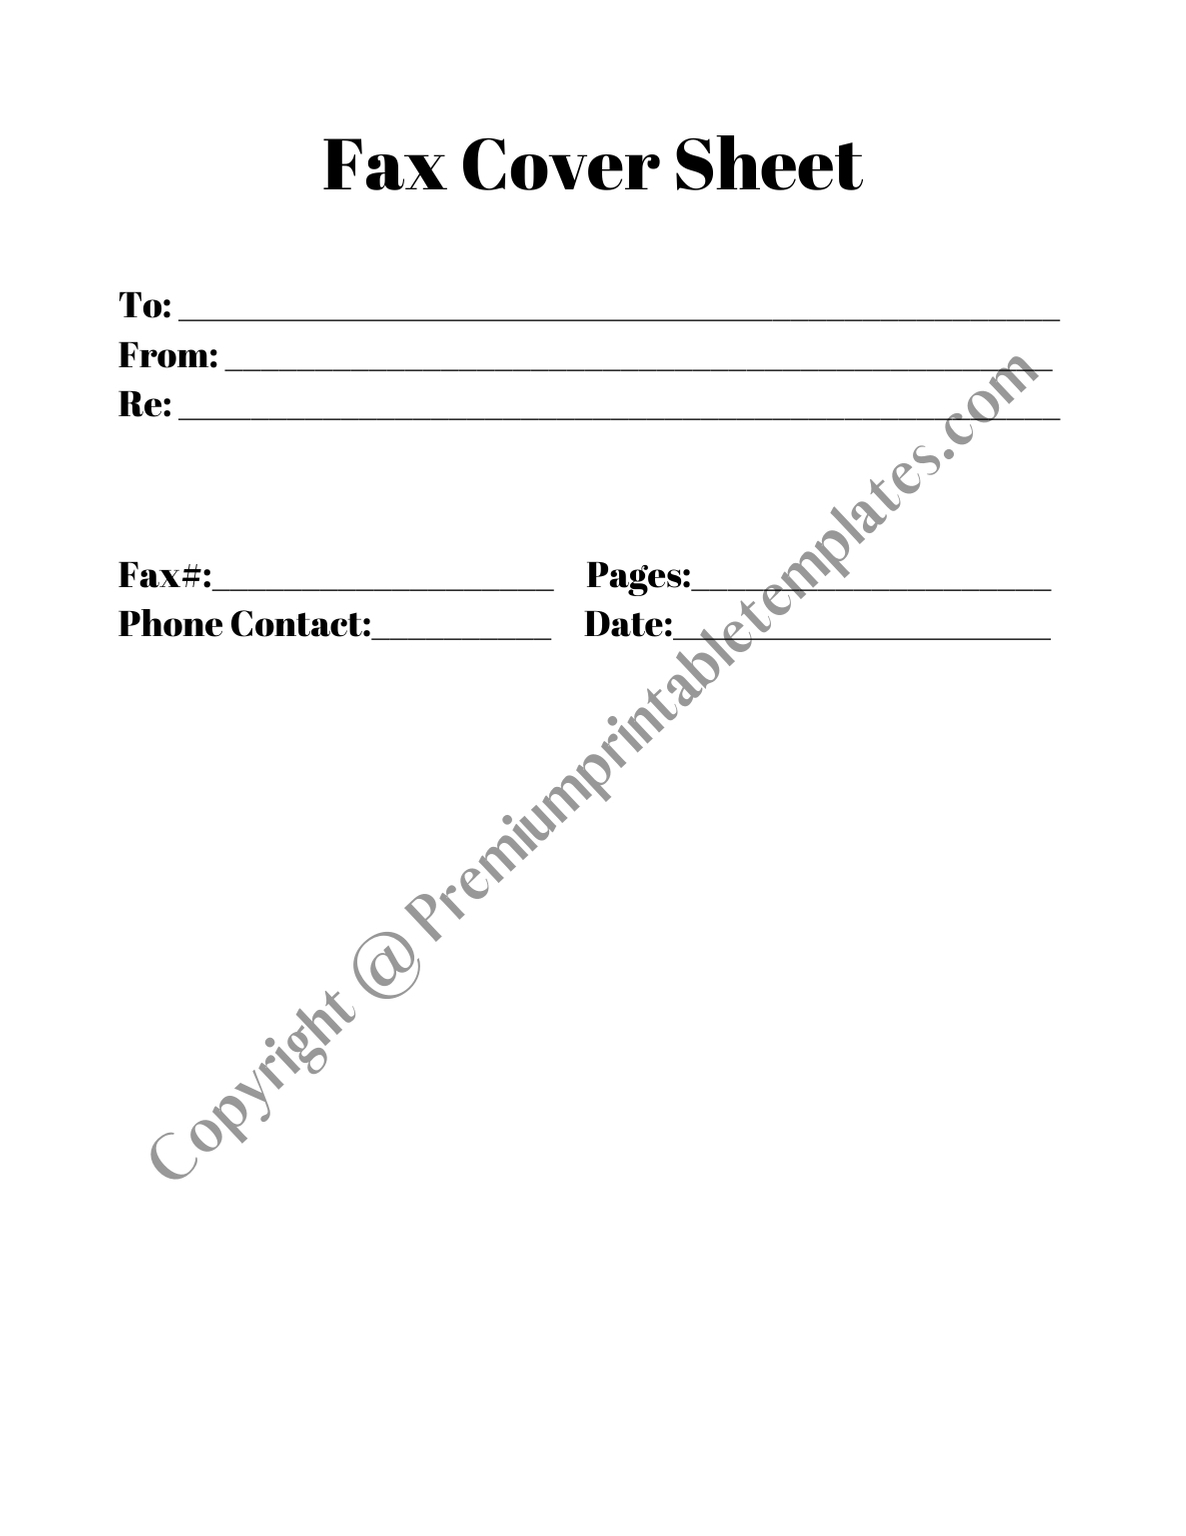 generic fax cover sheet printable pdf